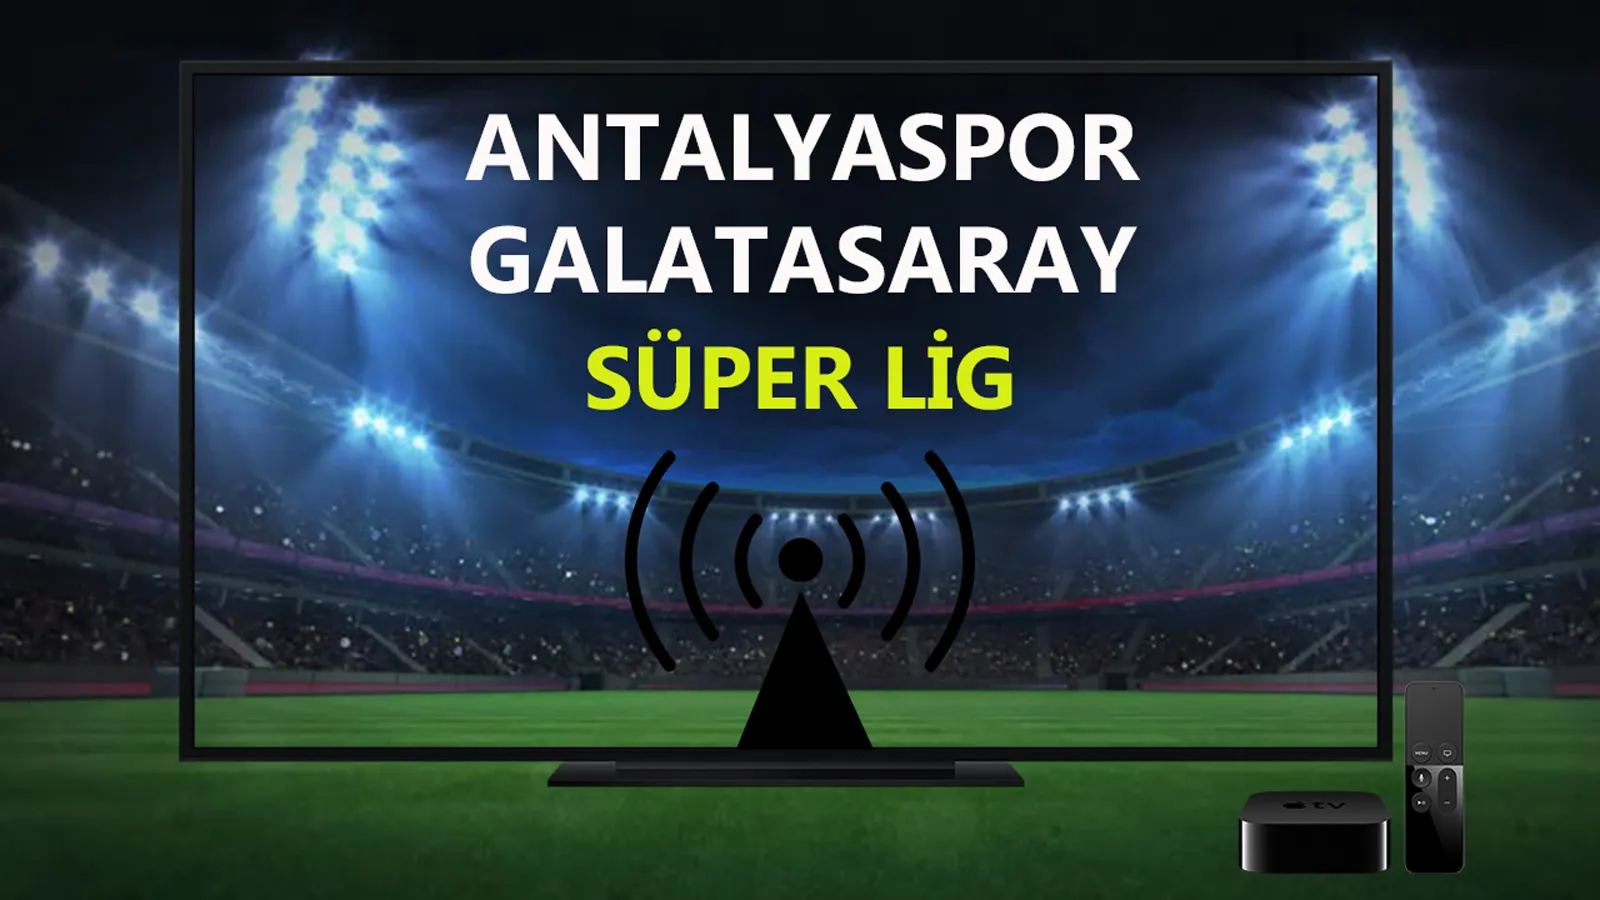 Antalyaspor Galatasaray Bein Sports canlı izle!